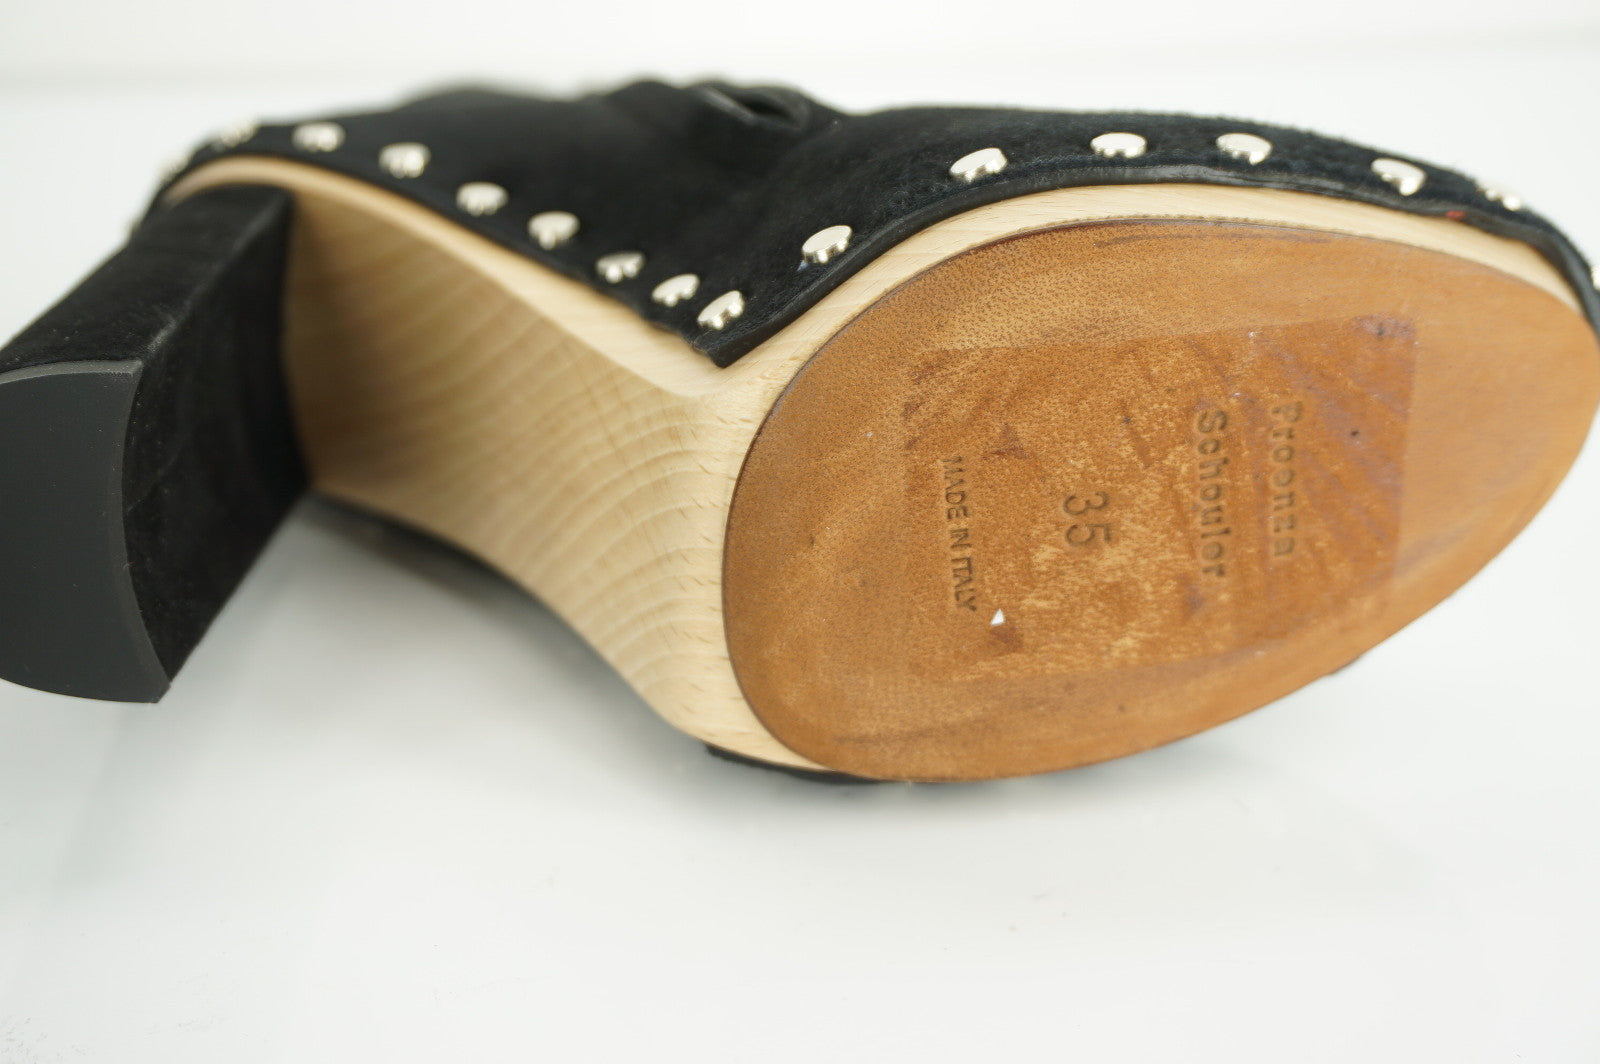 Proenza Schouler Studs Black Suede Platform Ankle Boots Size 35 Heels NIB $1050